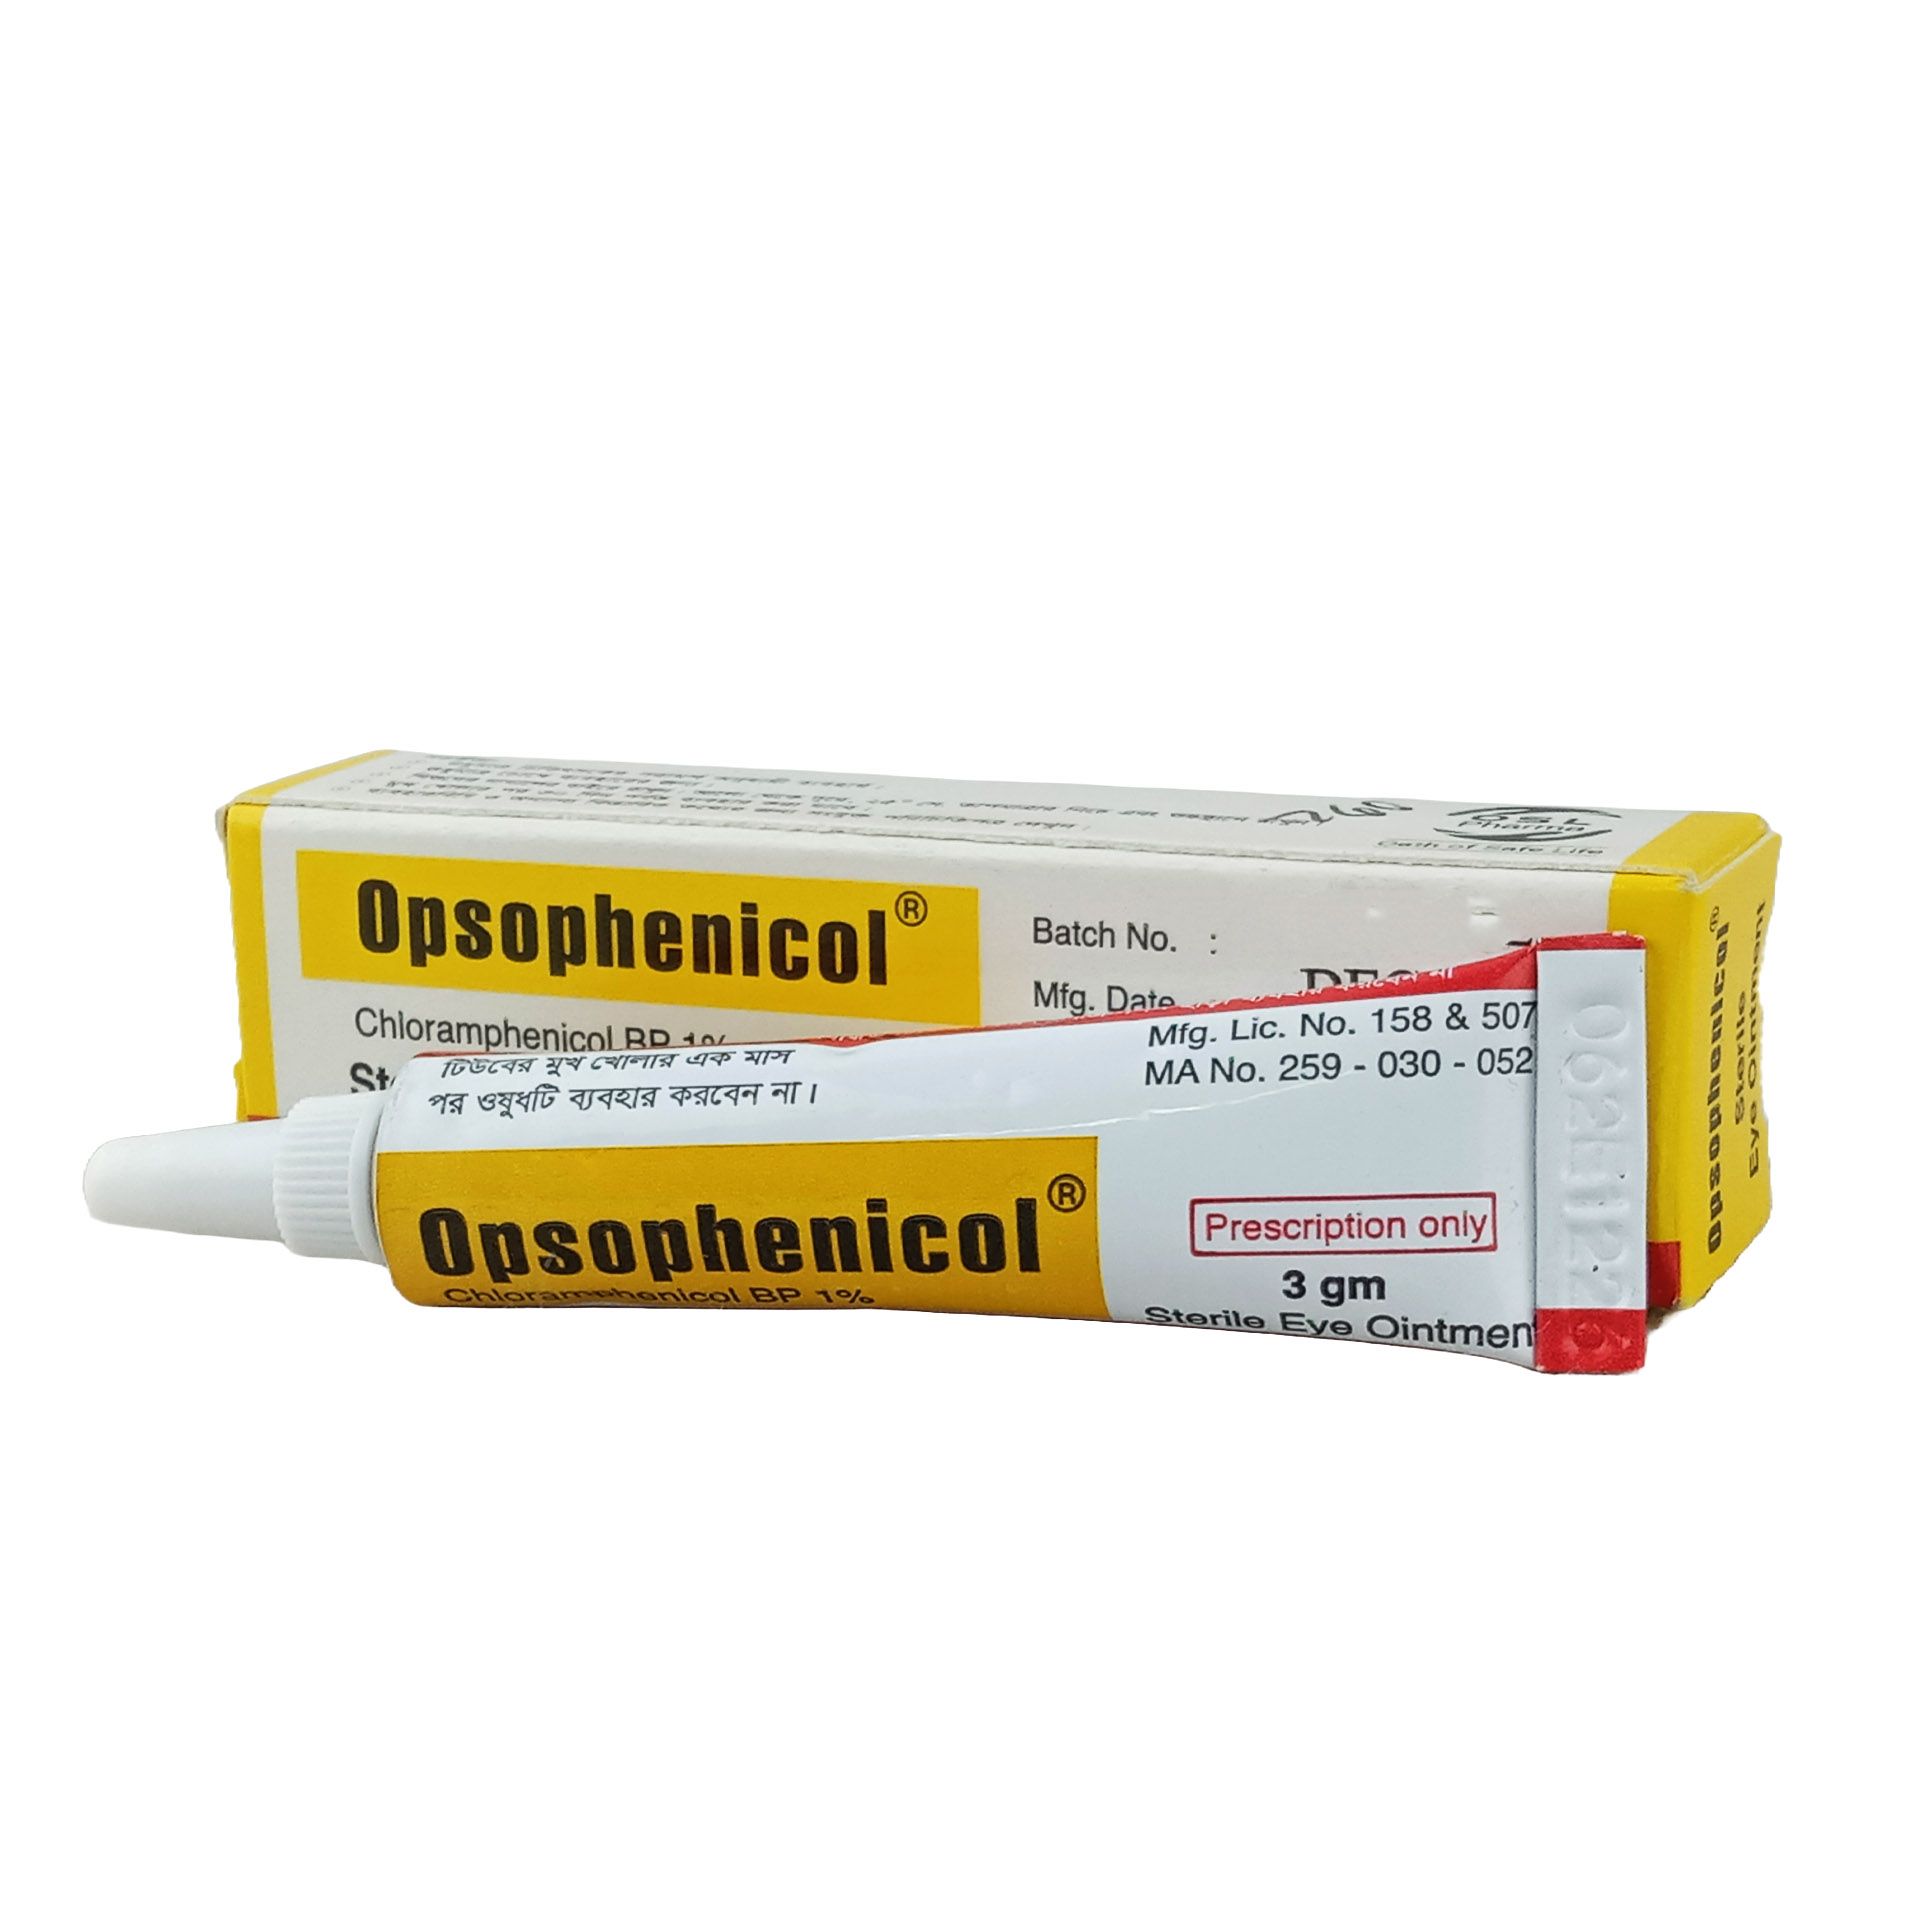 Opsophenicol 1% Eye Ointment